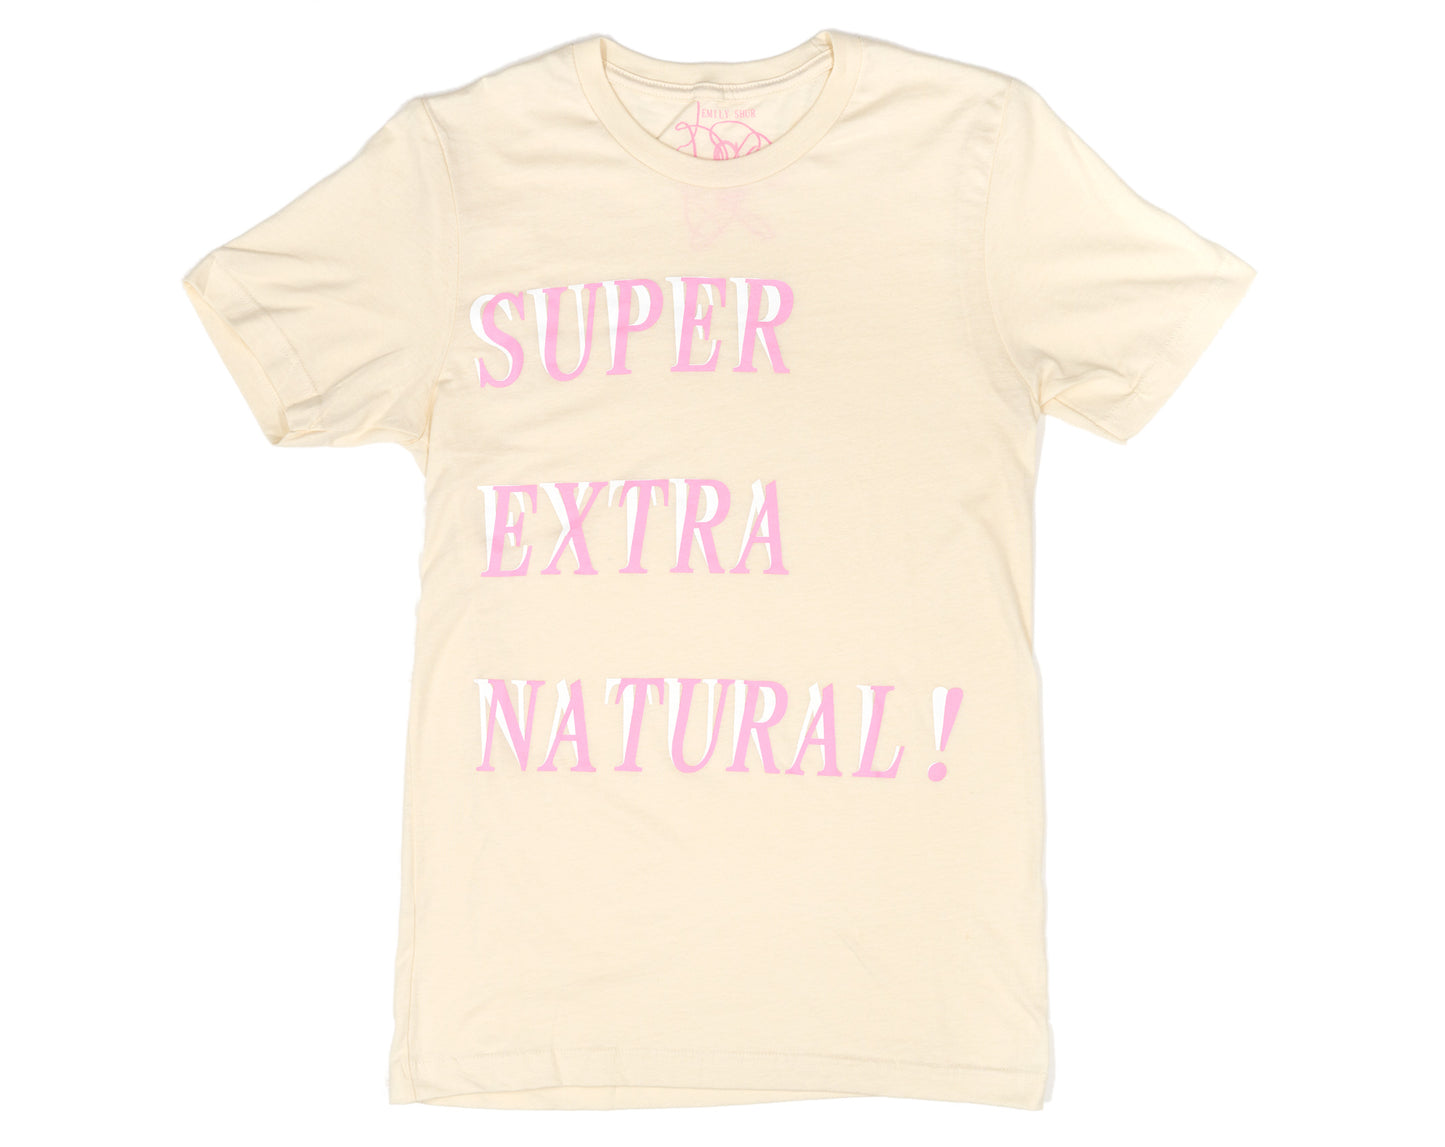 Super Extra Natural! Shirt